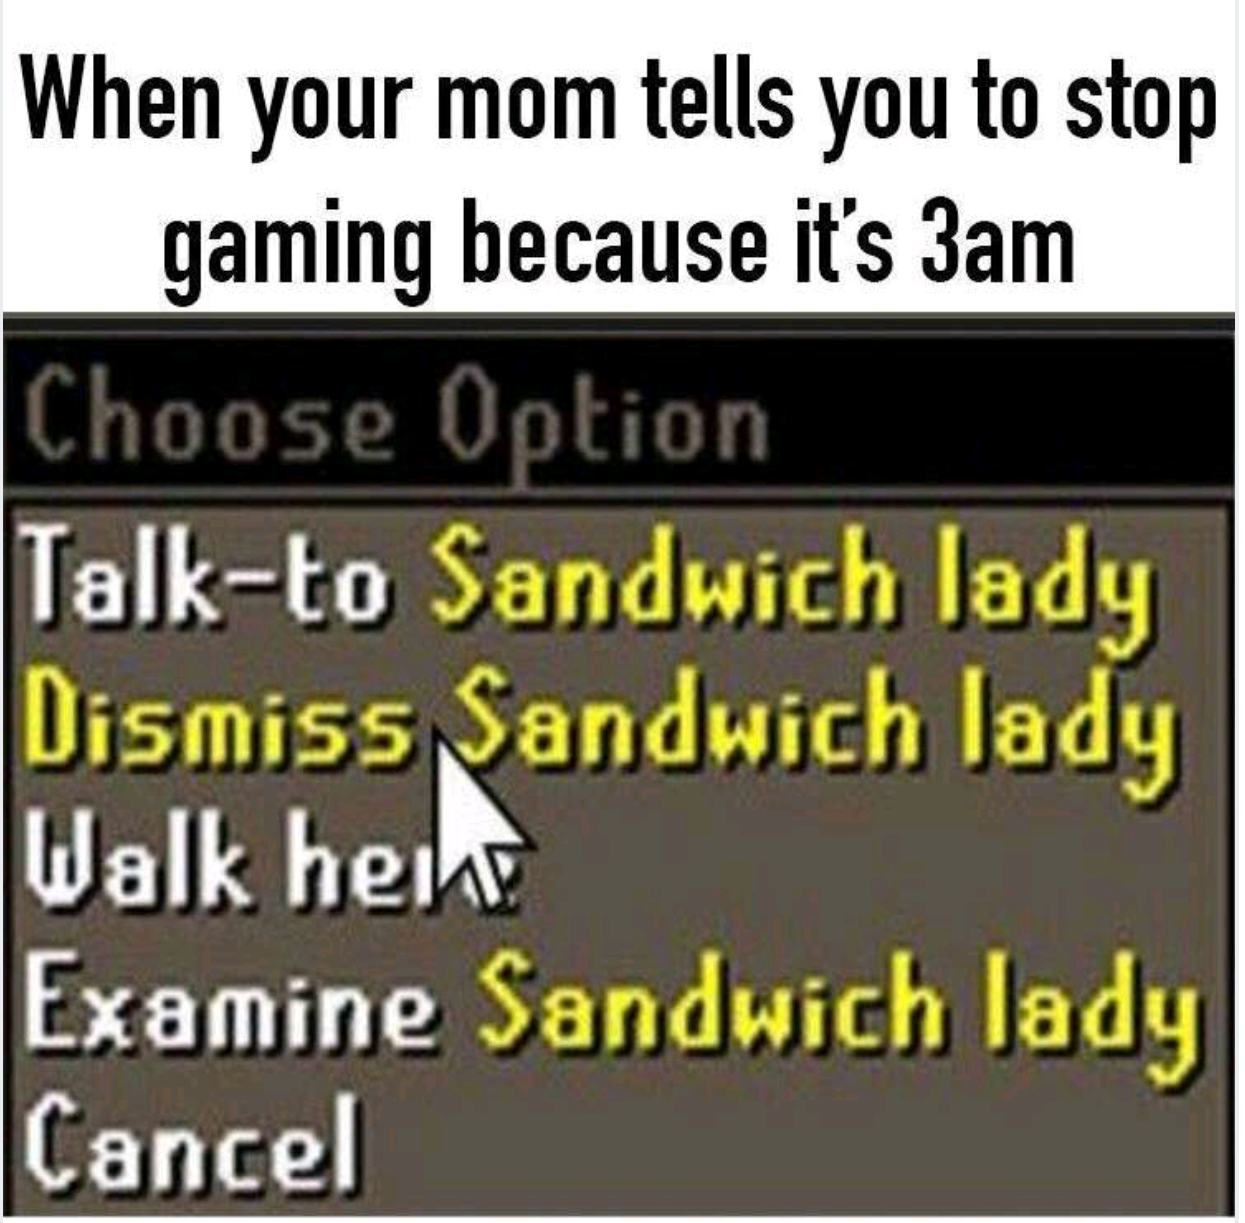 meme - best runescape meme - When your mom tells you to stop gaming because it's 3am Choose Option Talkto Sandwich lady Dismiss Sandwich lady Walk hent Examine Sandwich lady Cancel